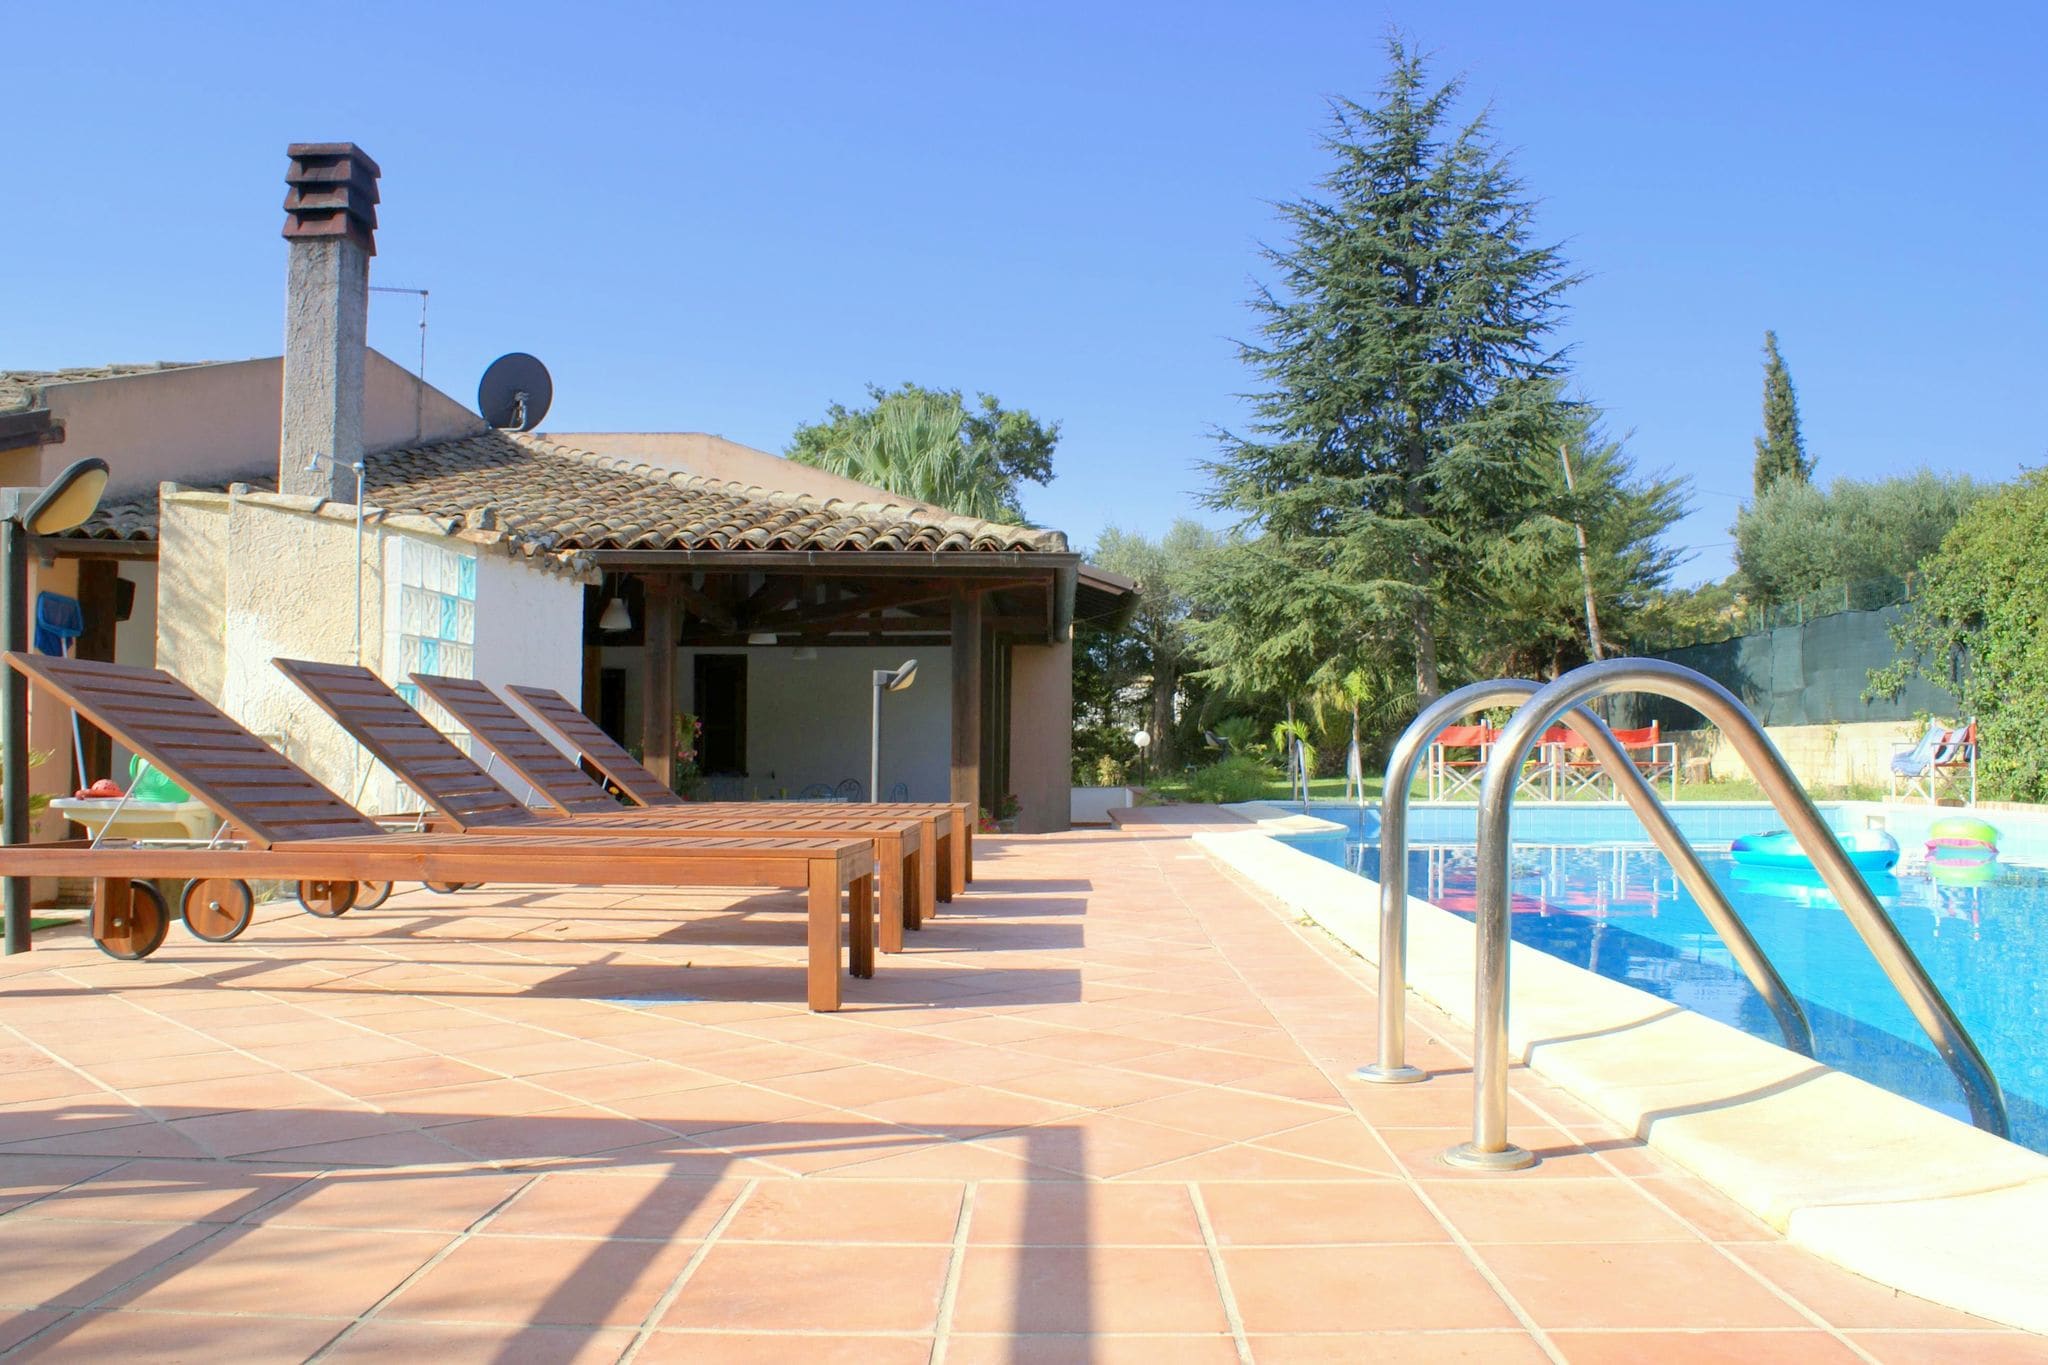 Luxuriöse Villa in Caltagirone, Italien mit privatem Pool